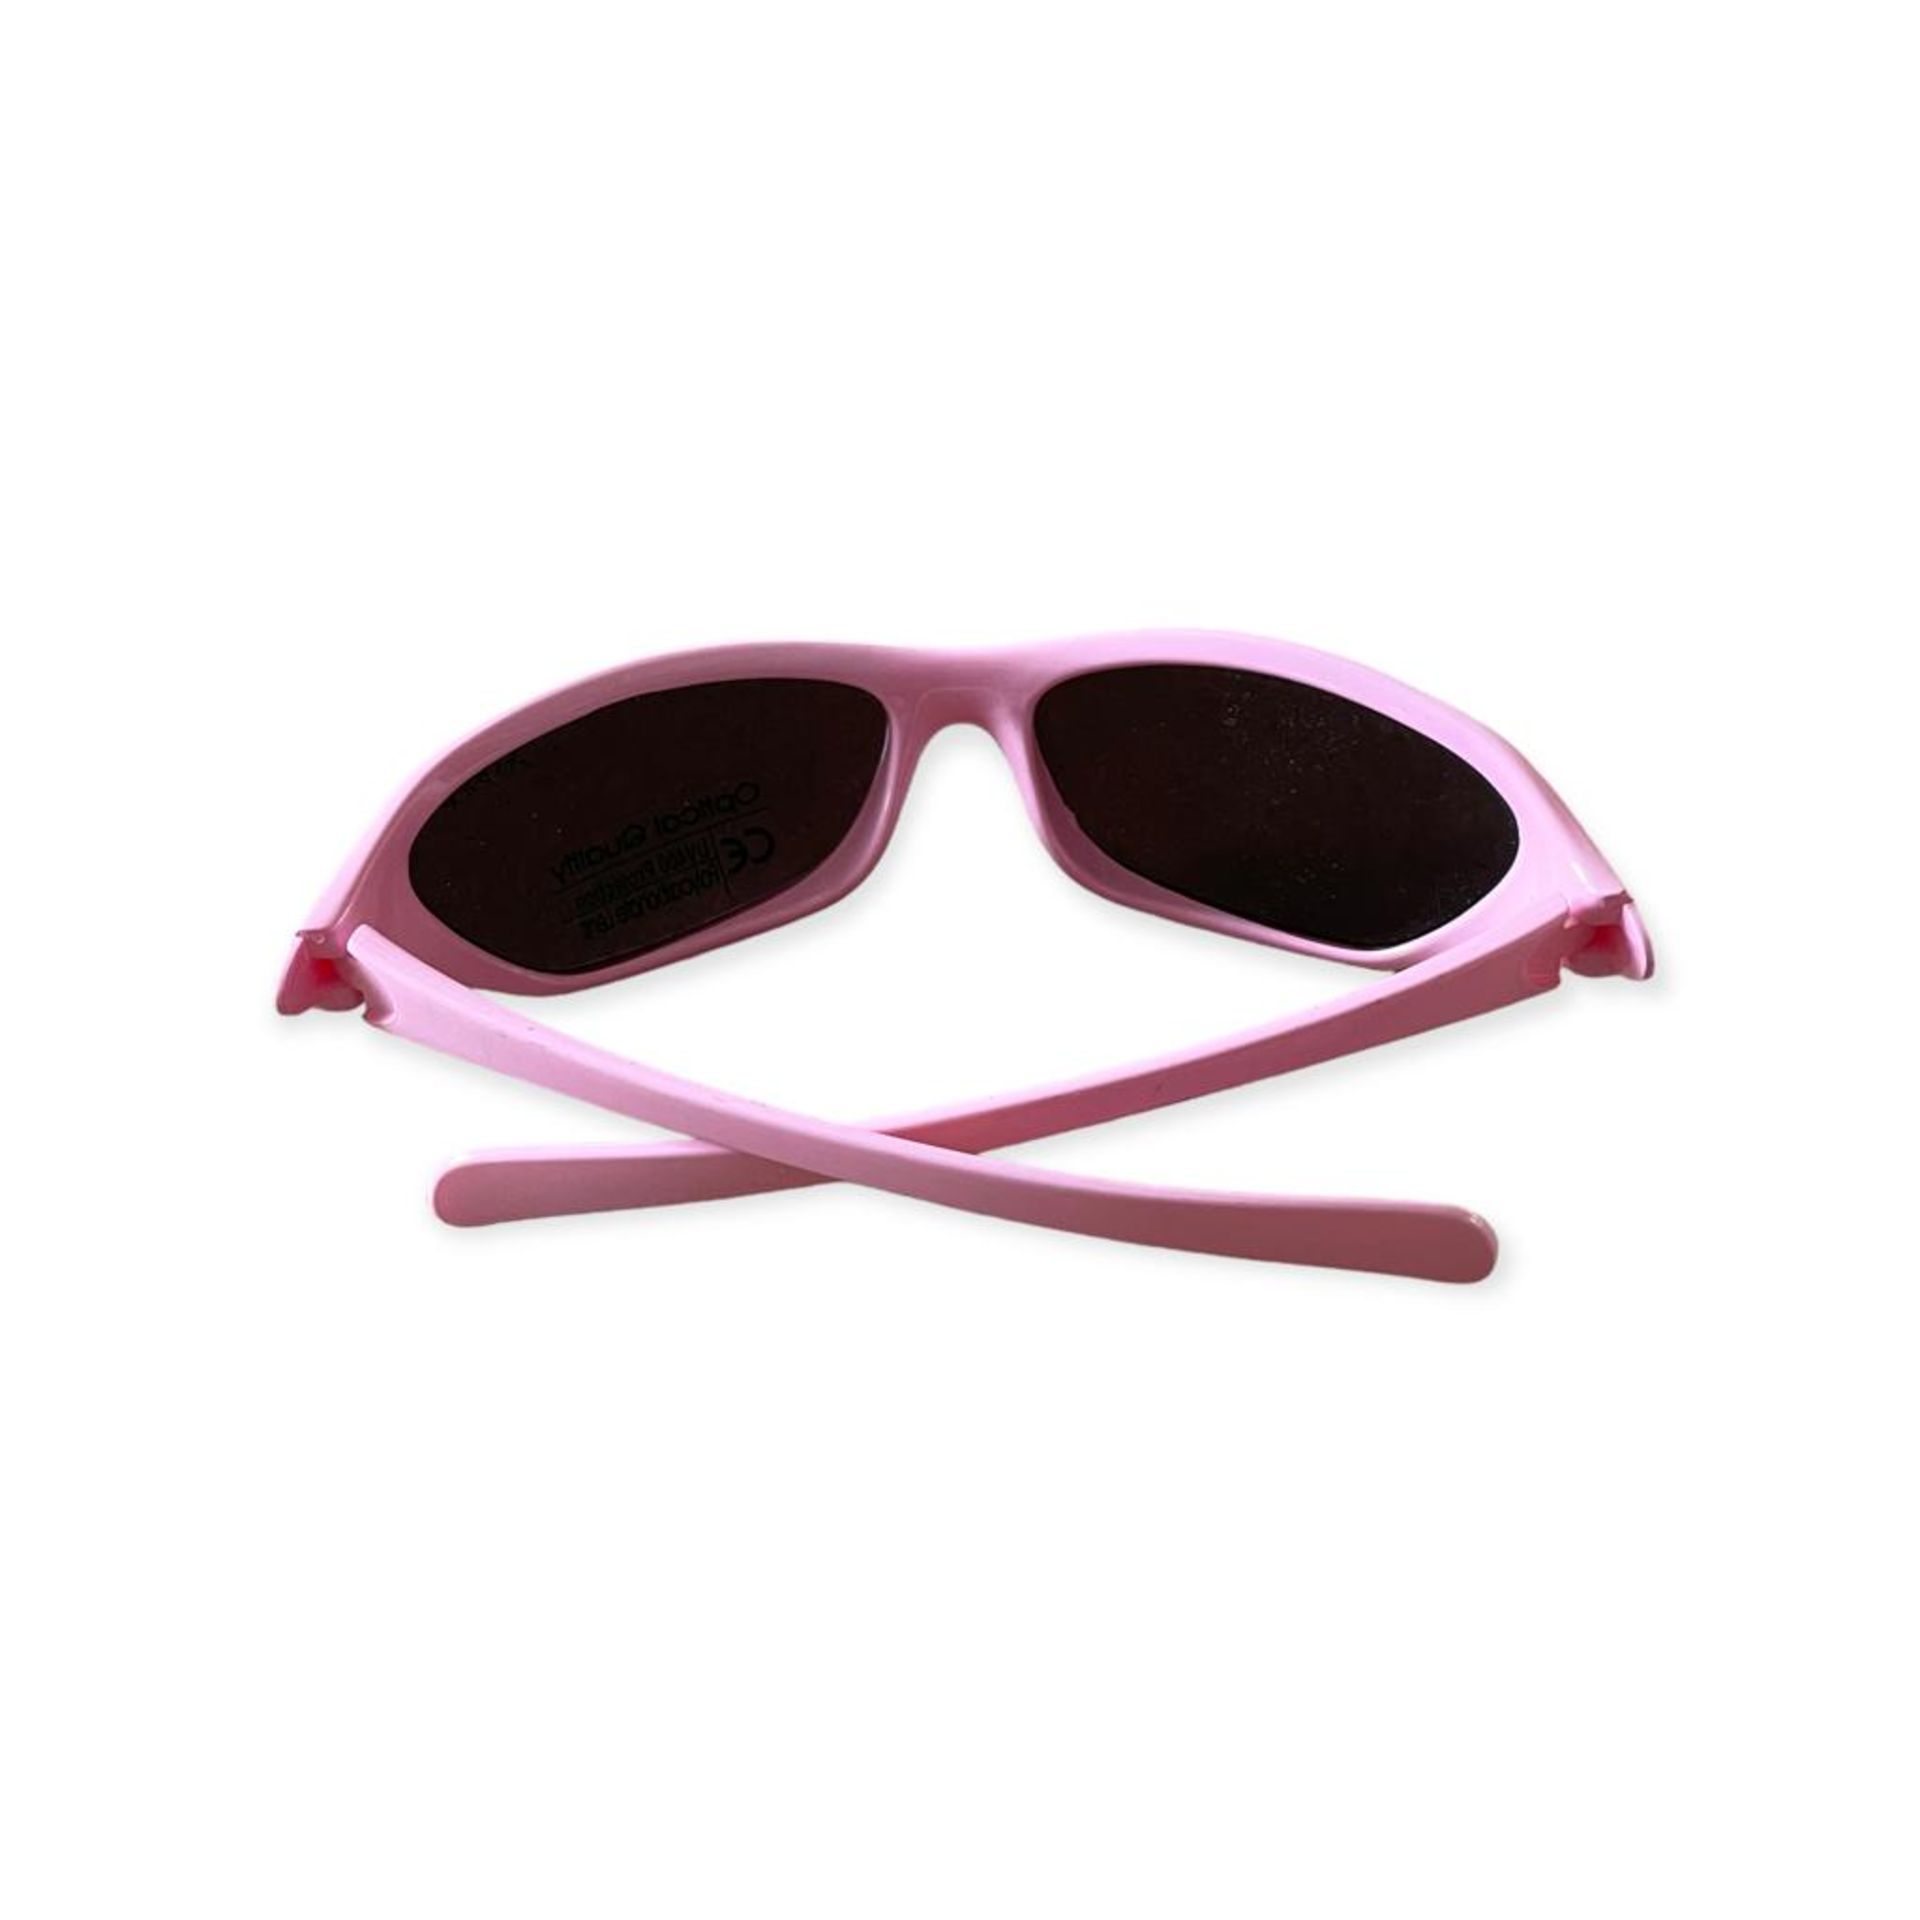 Aspex pink childrens sunglasses, Ex-Display - Image 3 of 4